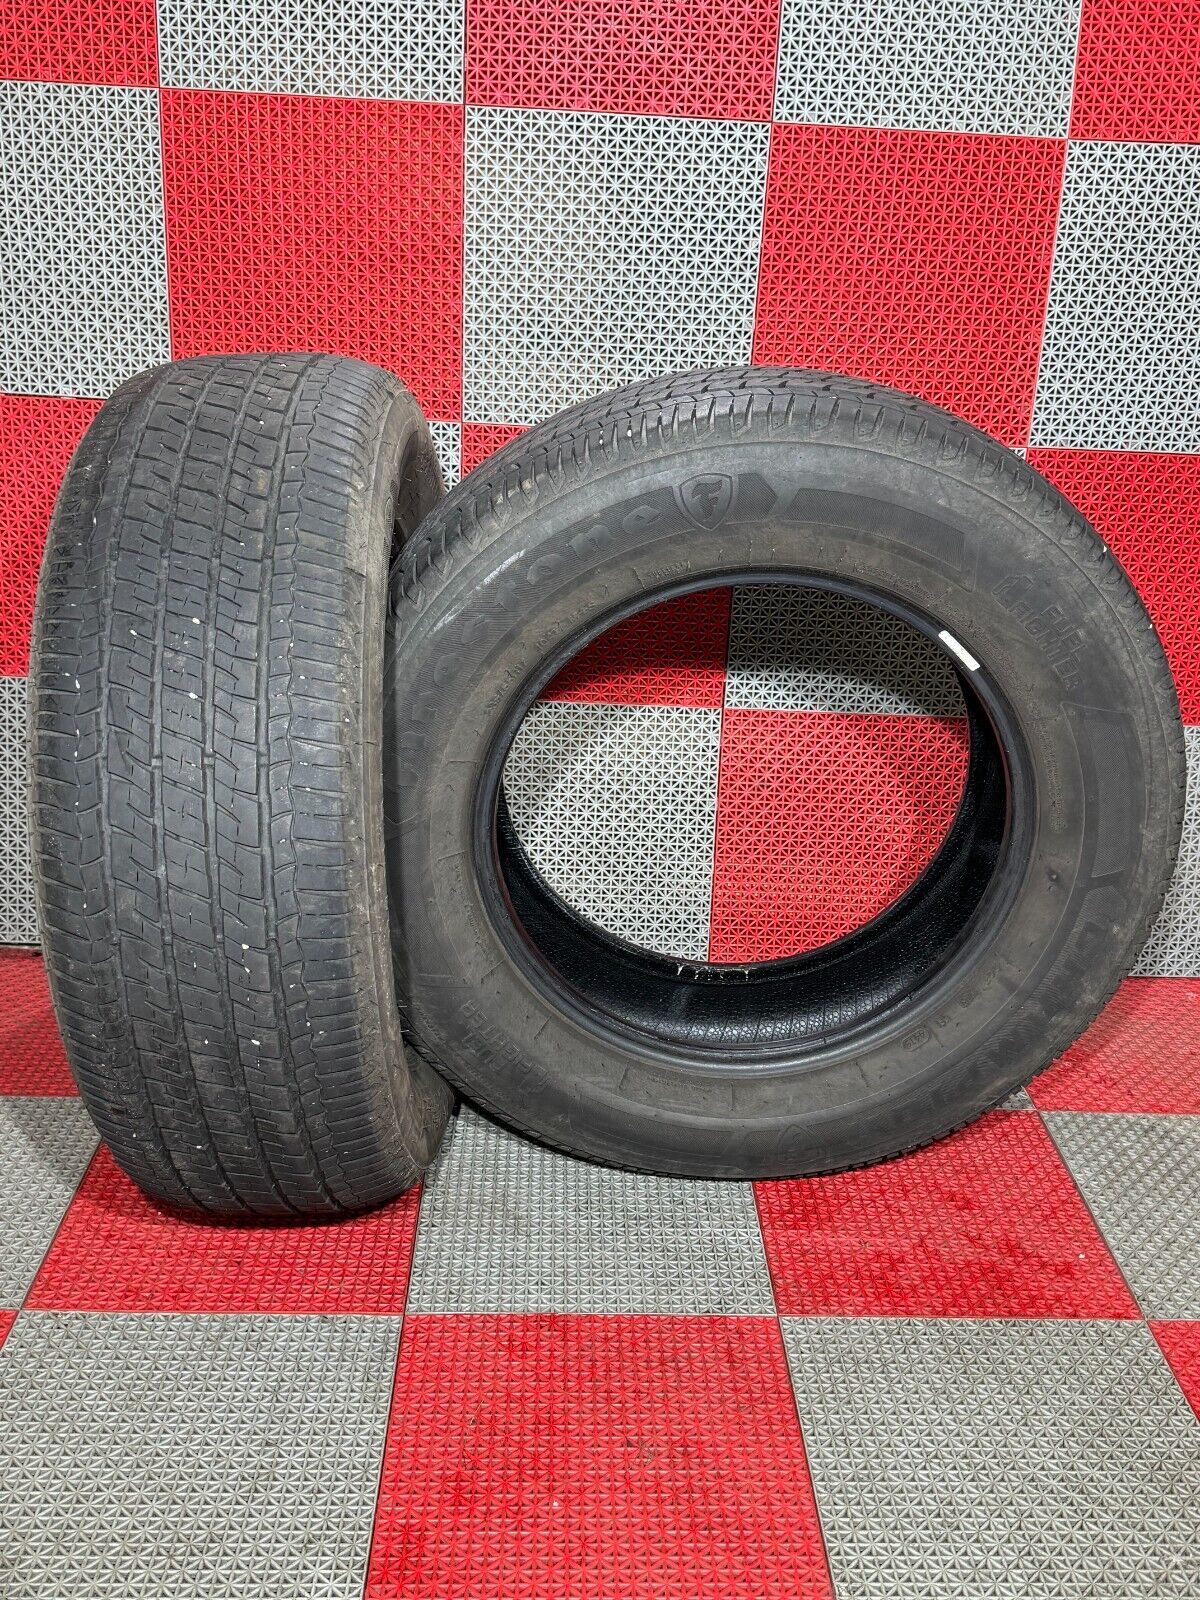 2x Used 235/65 R17 Firestone Champion Tires 7/32 Tread 235/65/17